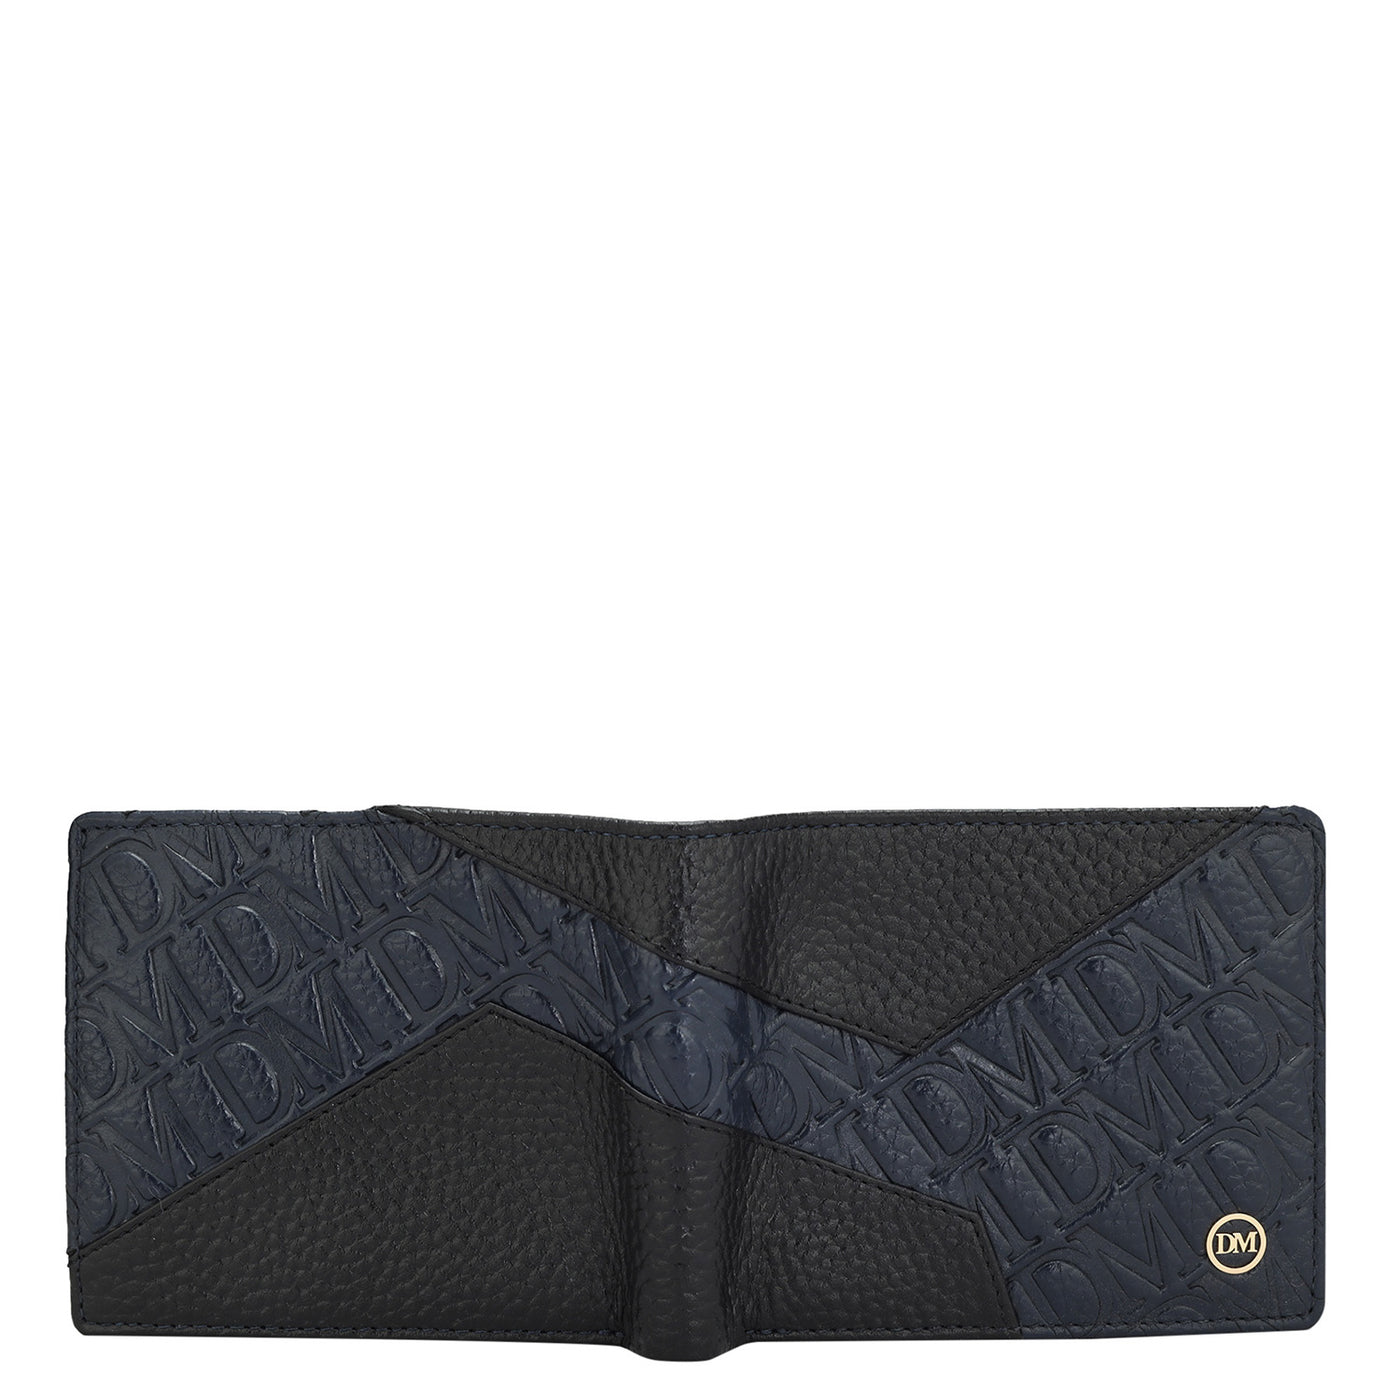 Monogram Wax Leather Mens Wallet - Blue & Black